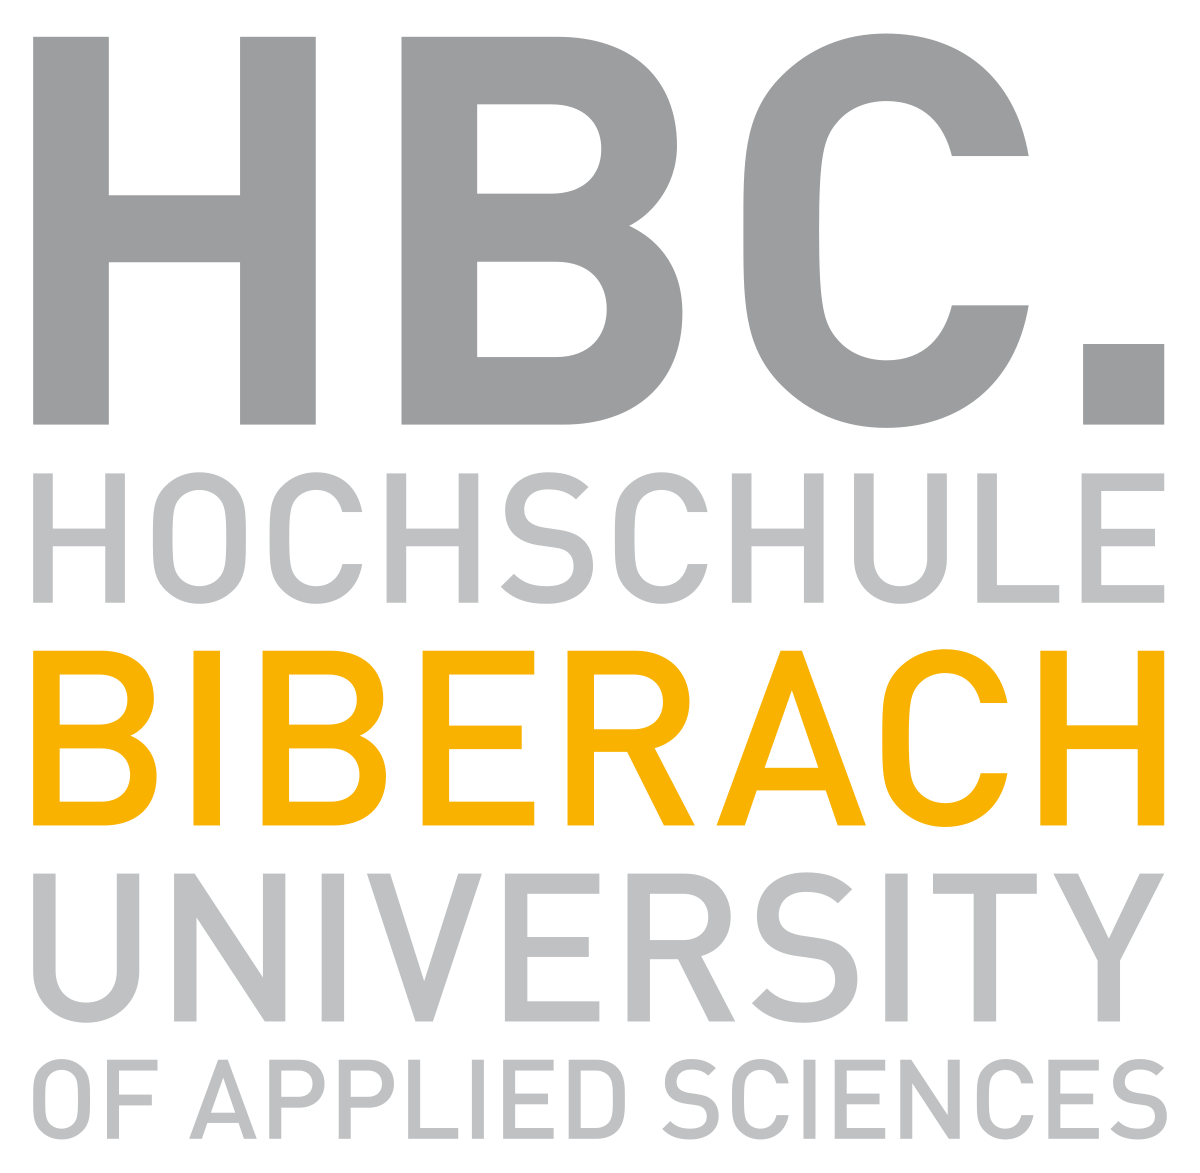 Biberach University of Applied Sciences